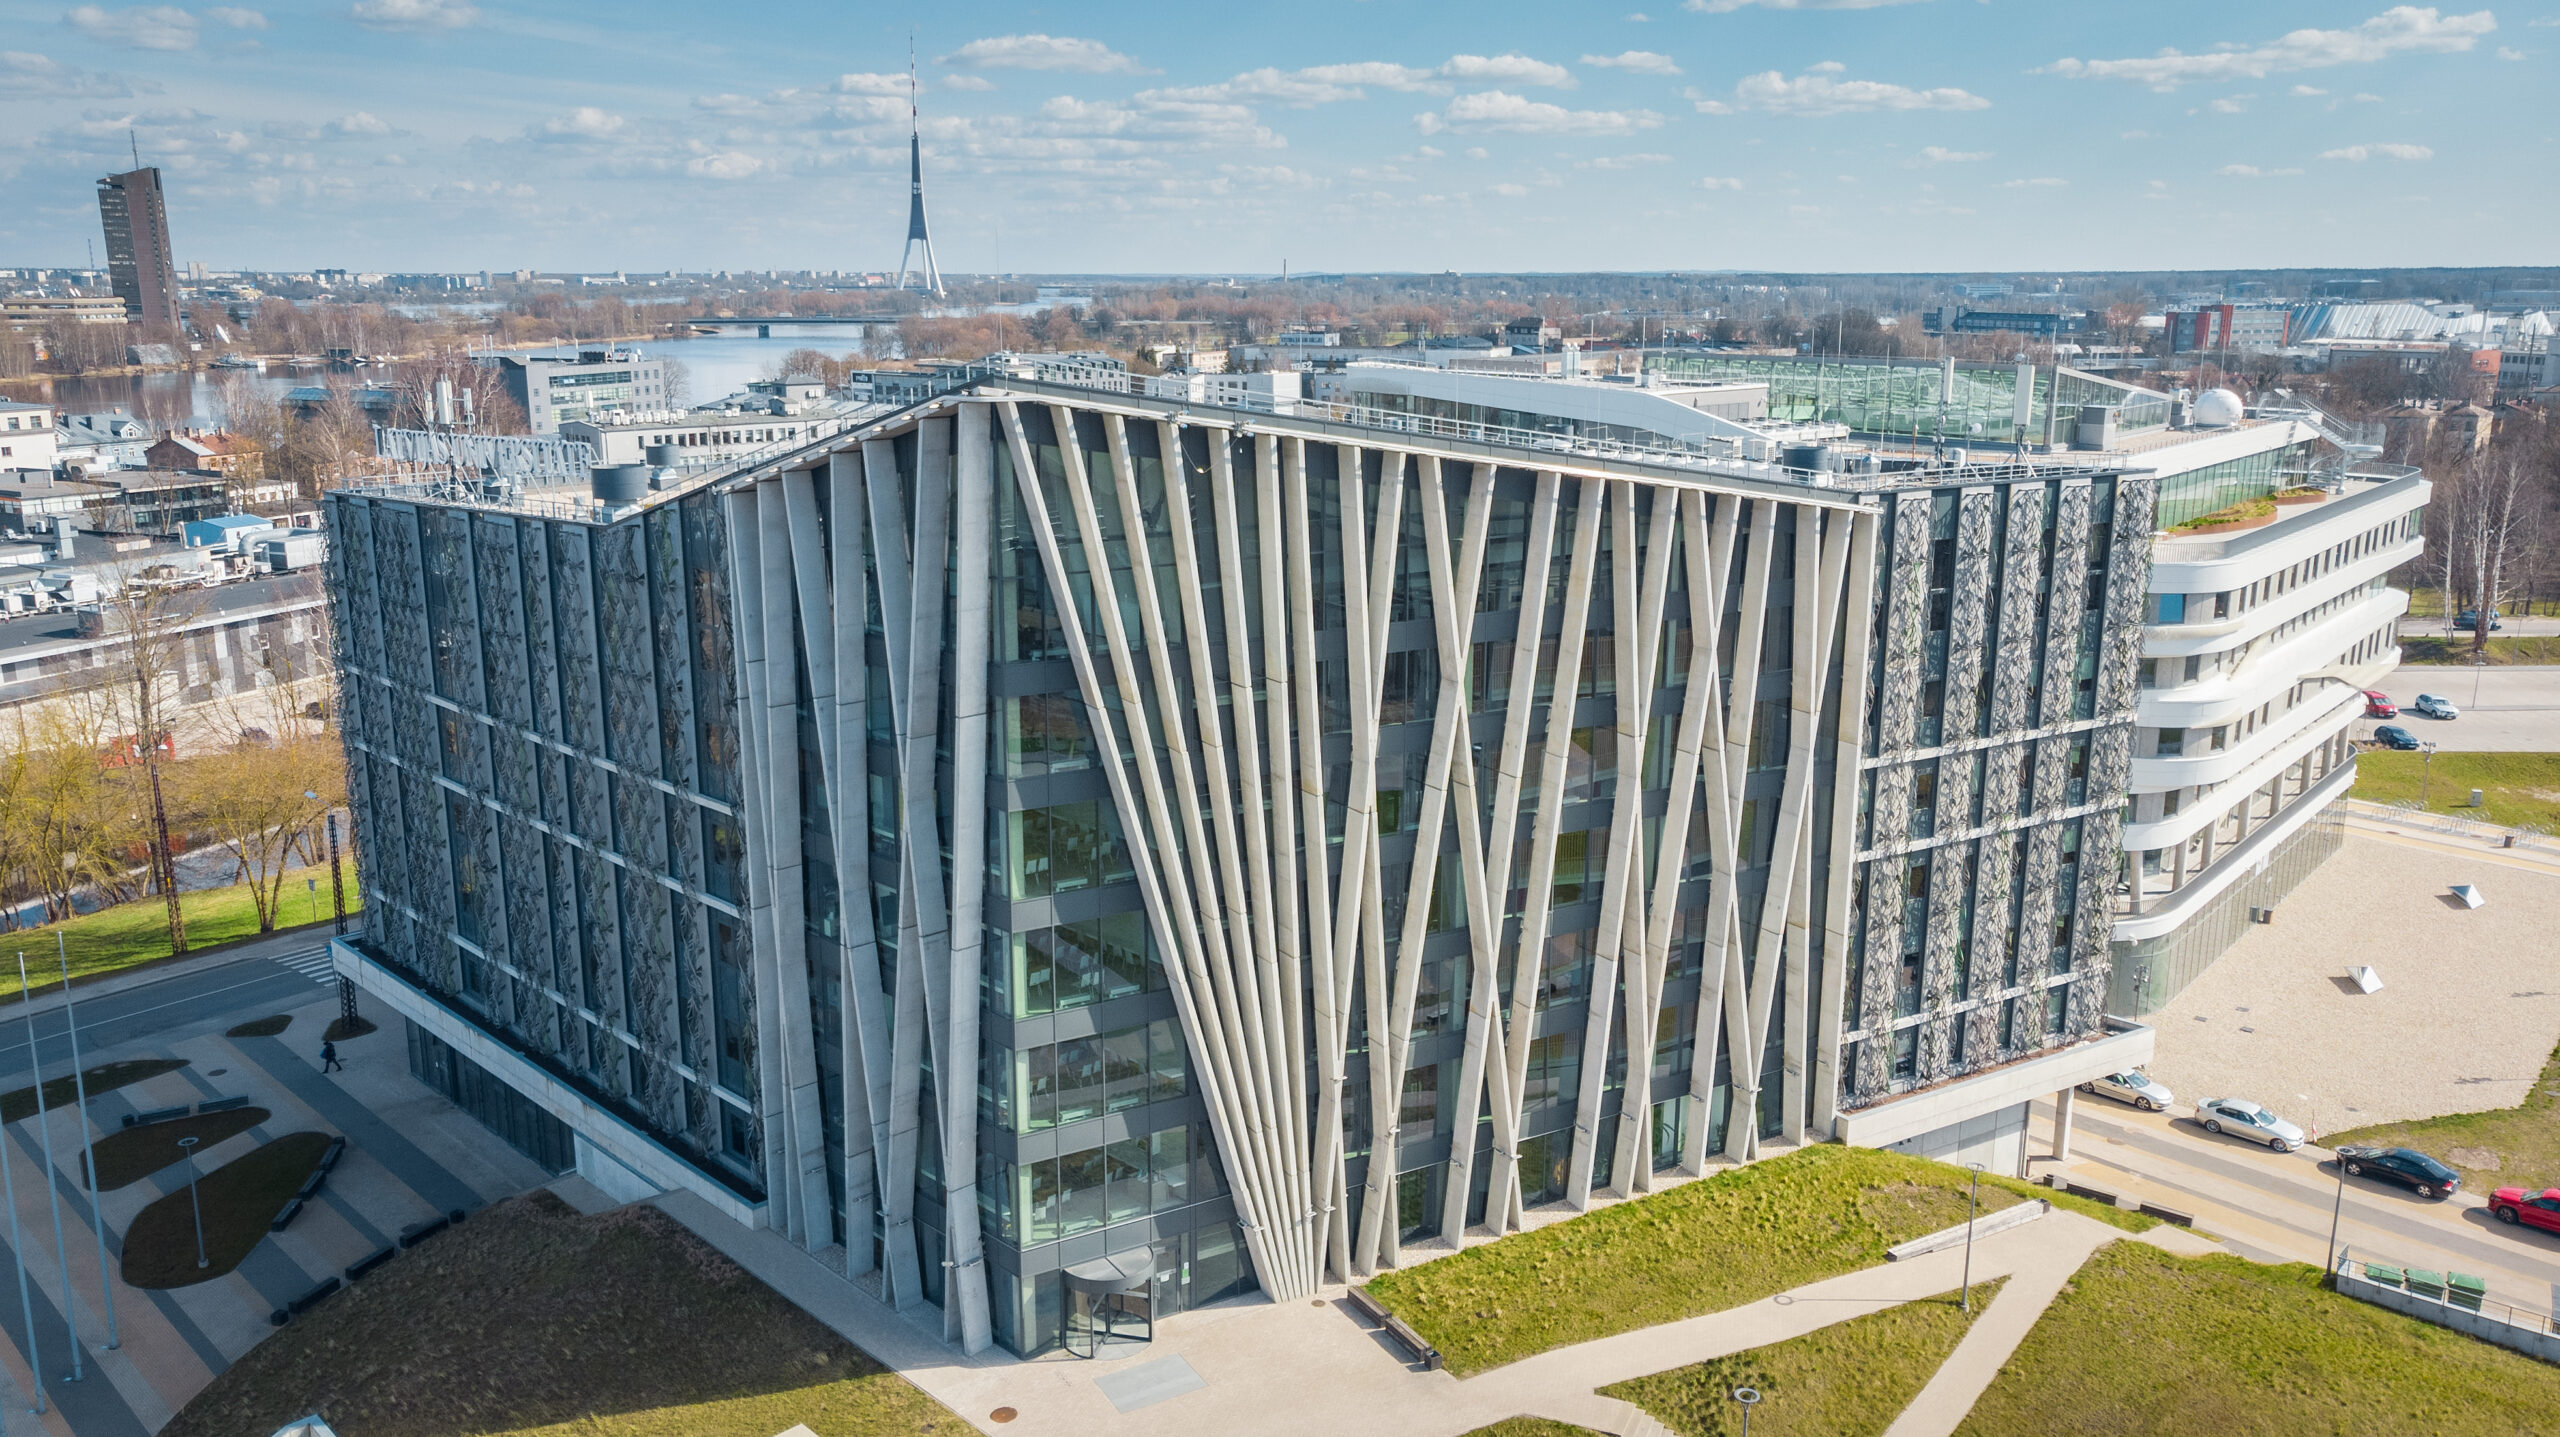 University of Latvia Find and Study 10 scaled - دانشگاه لتونی